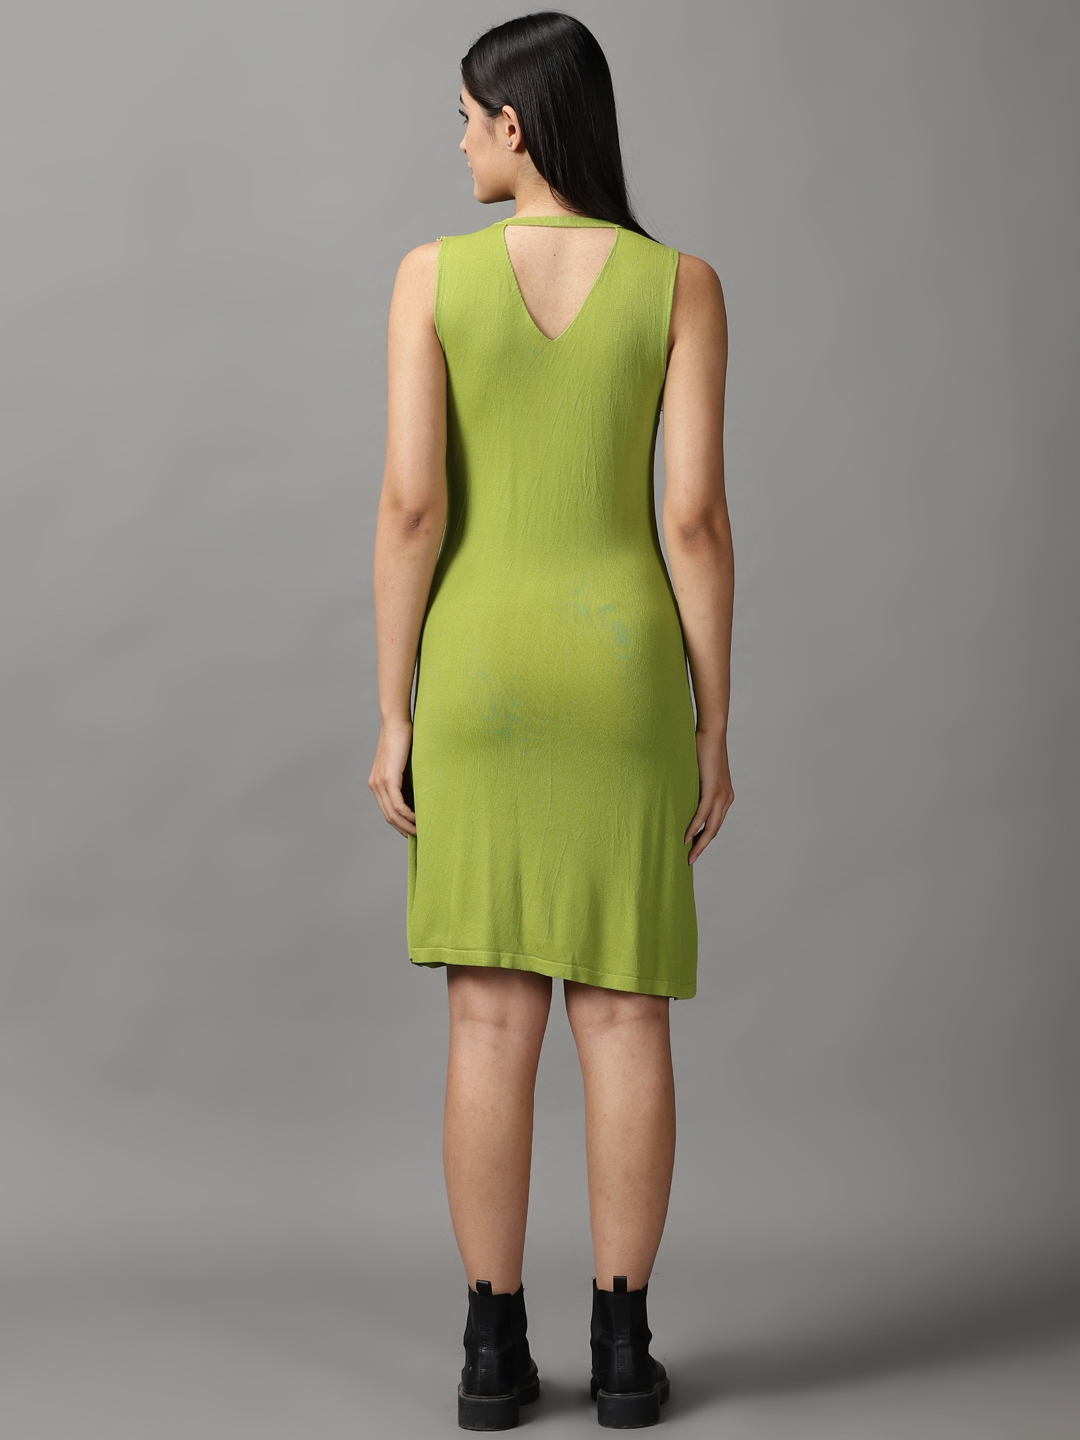 Women's Green Acrylic Solid Dresses